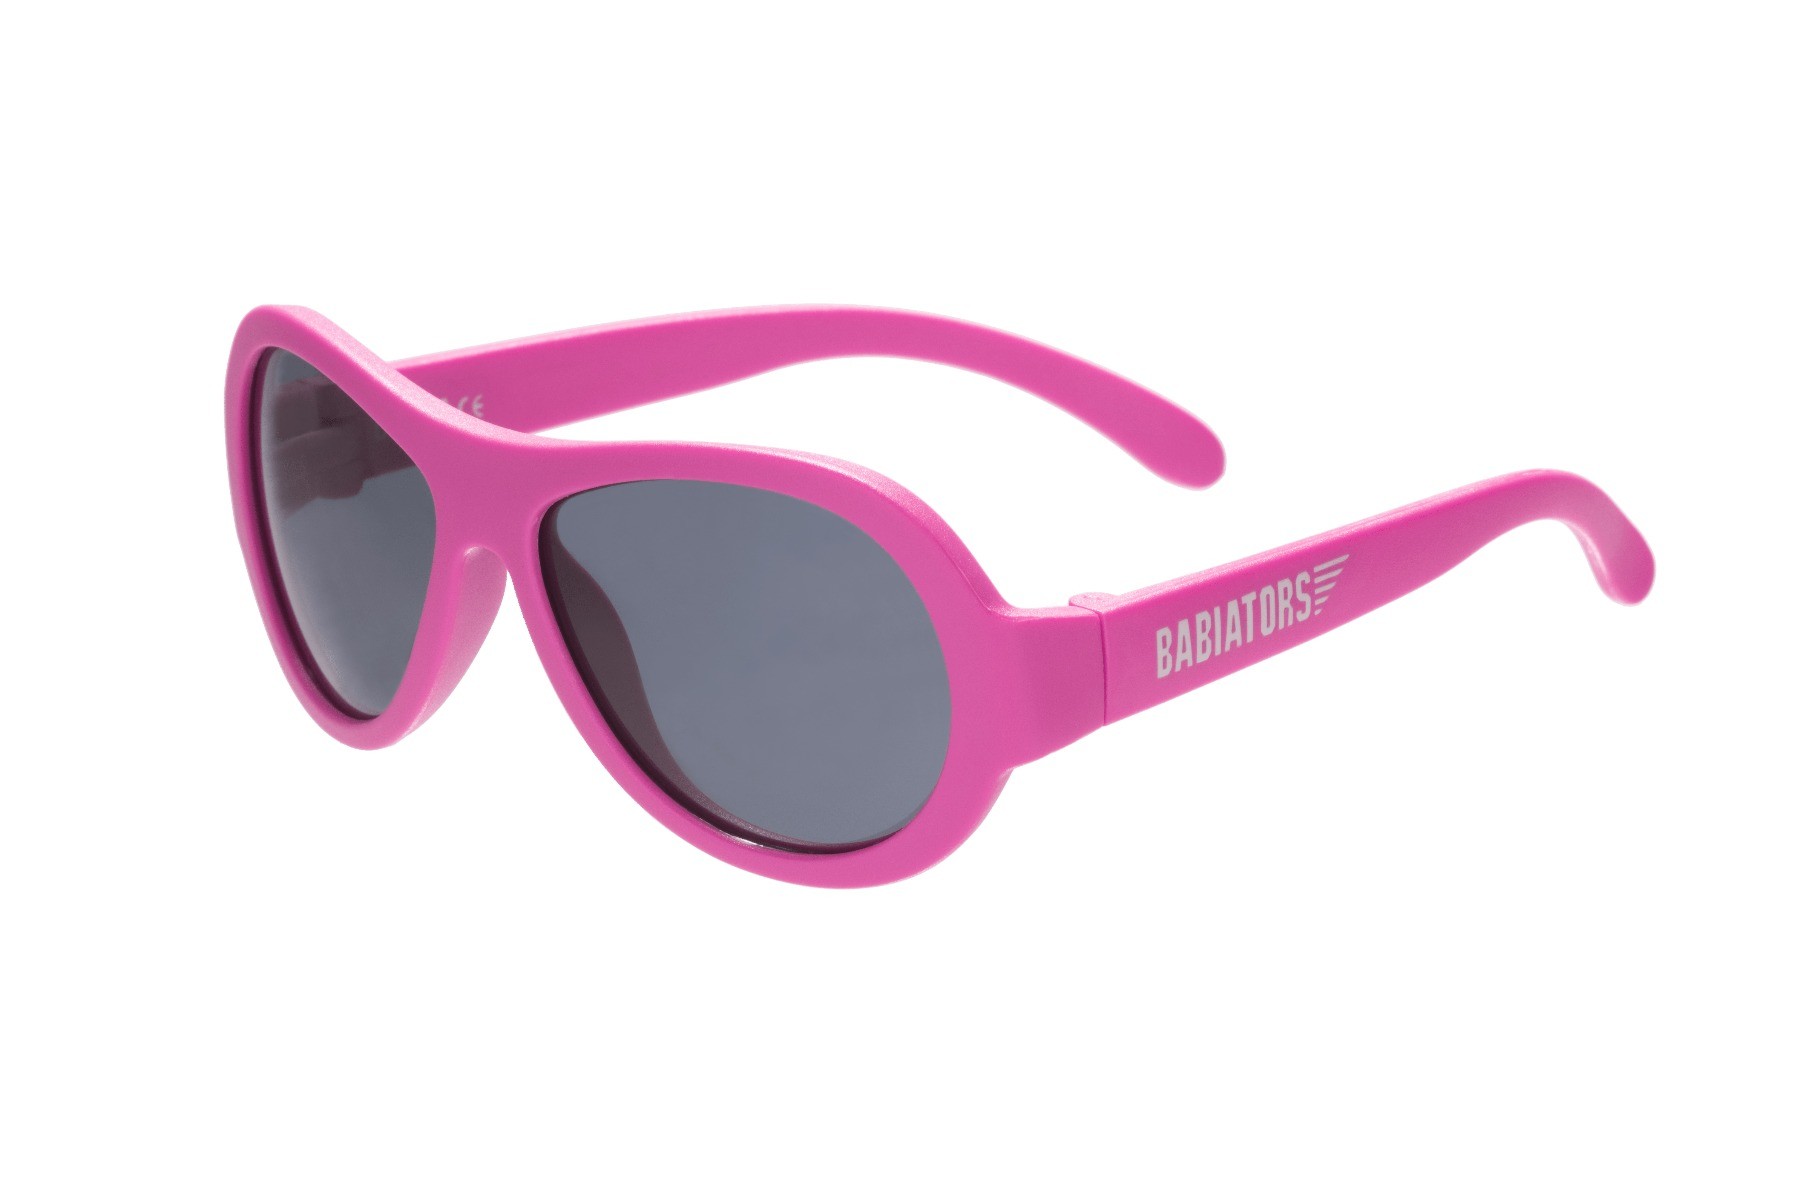 Babiators - UV sunglasses for babies - Popstar Pink 